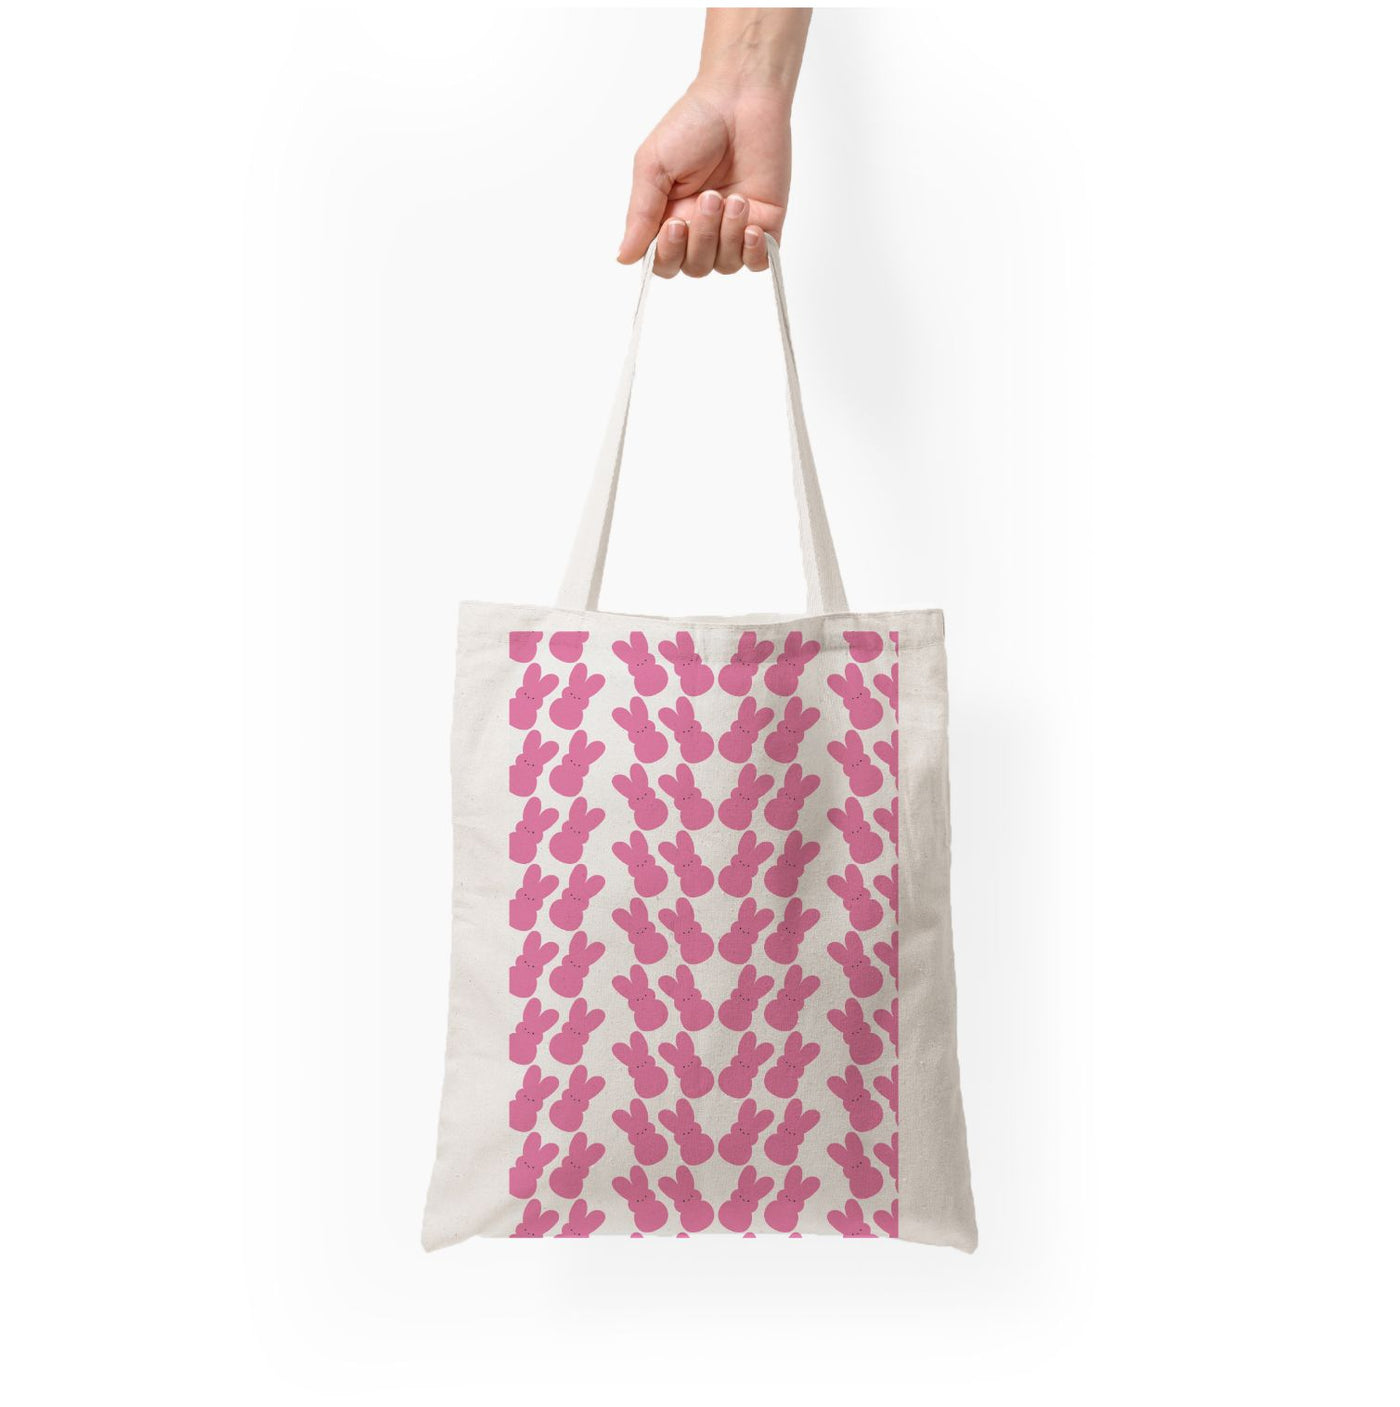 Bunny Pattern - Lil Peep Tote Bag